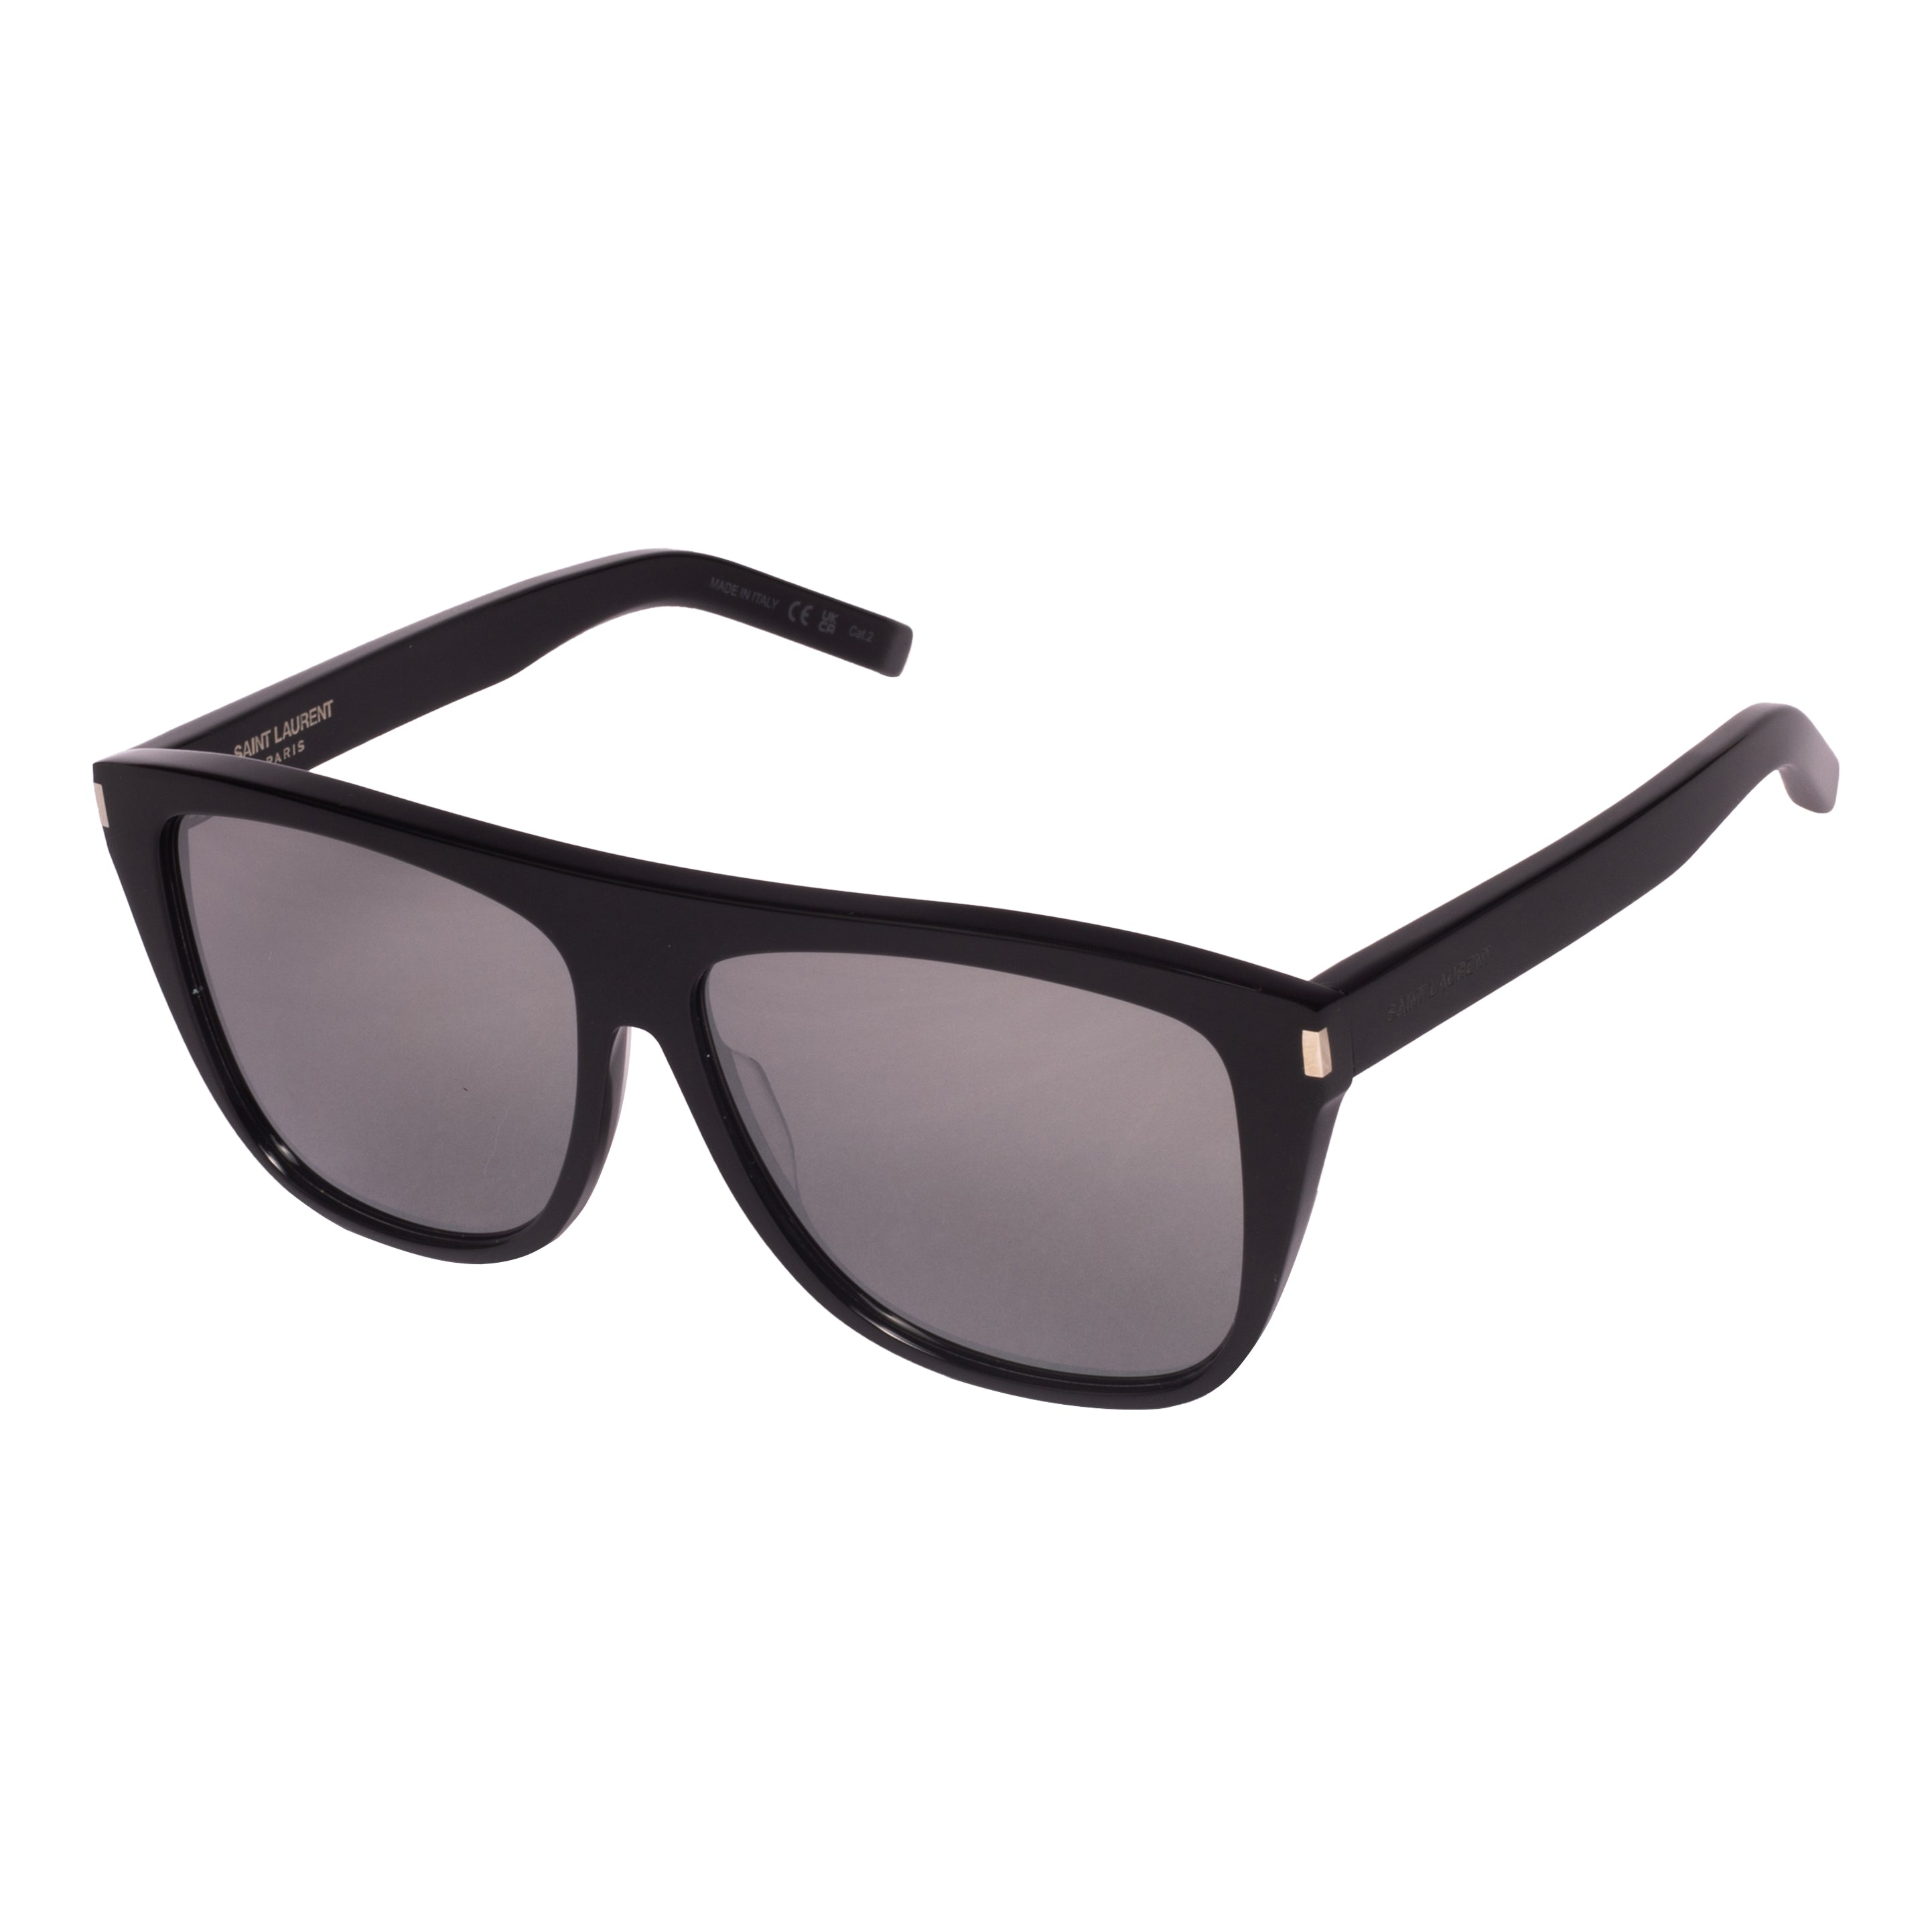 Saint Laurent-SL 1-59-001 Sunglasses - Premium Sunglasses from Saint Laurent - Just Rs. 23300! Shop now at Laxmi Opticians